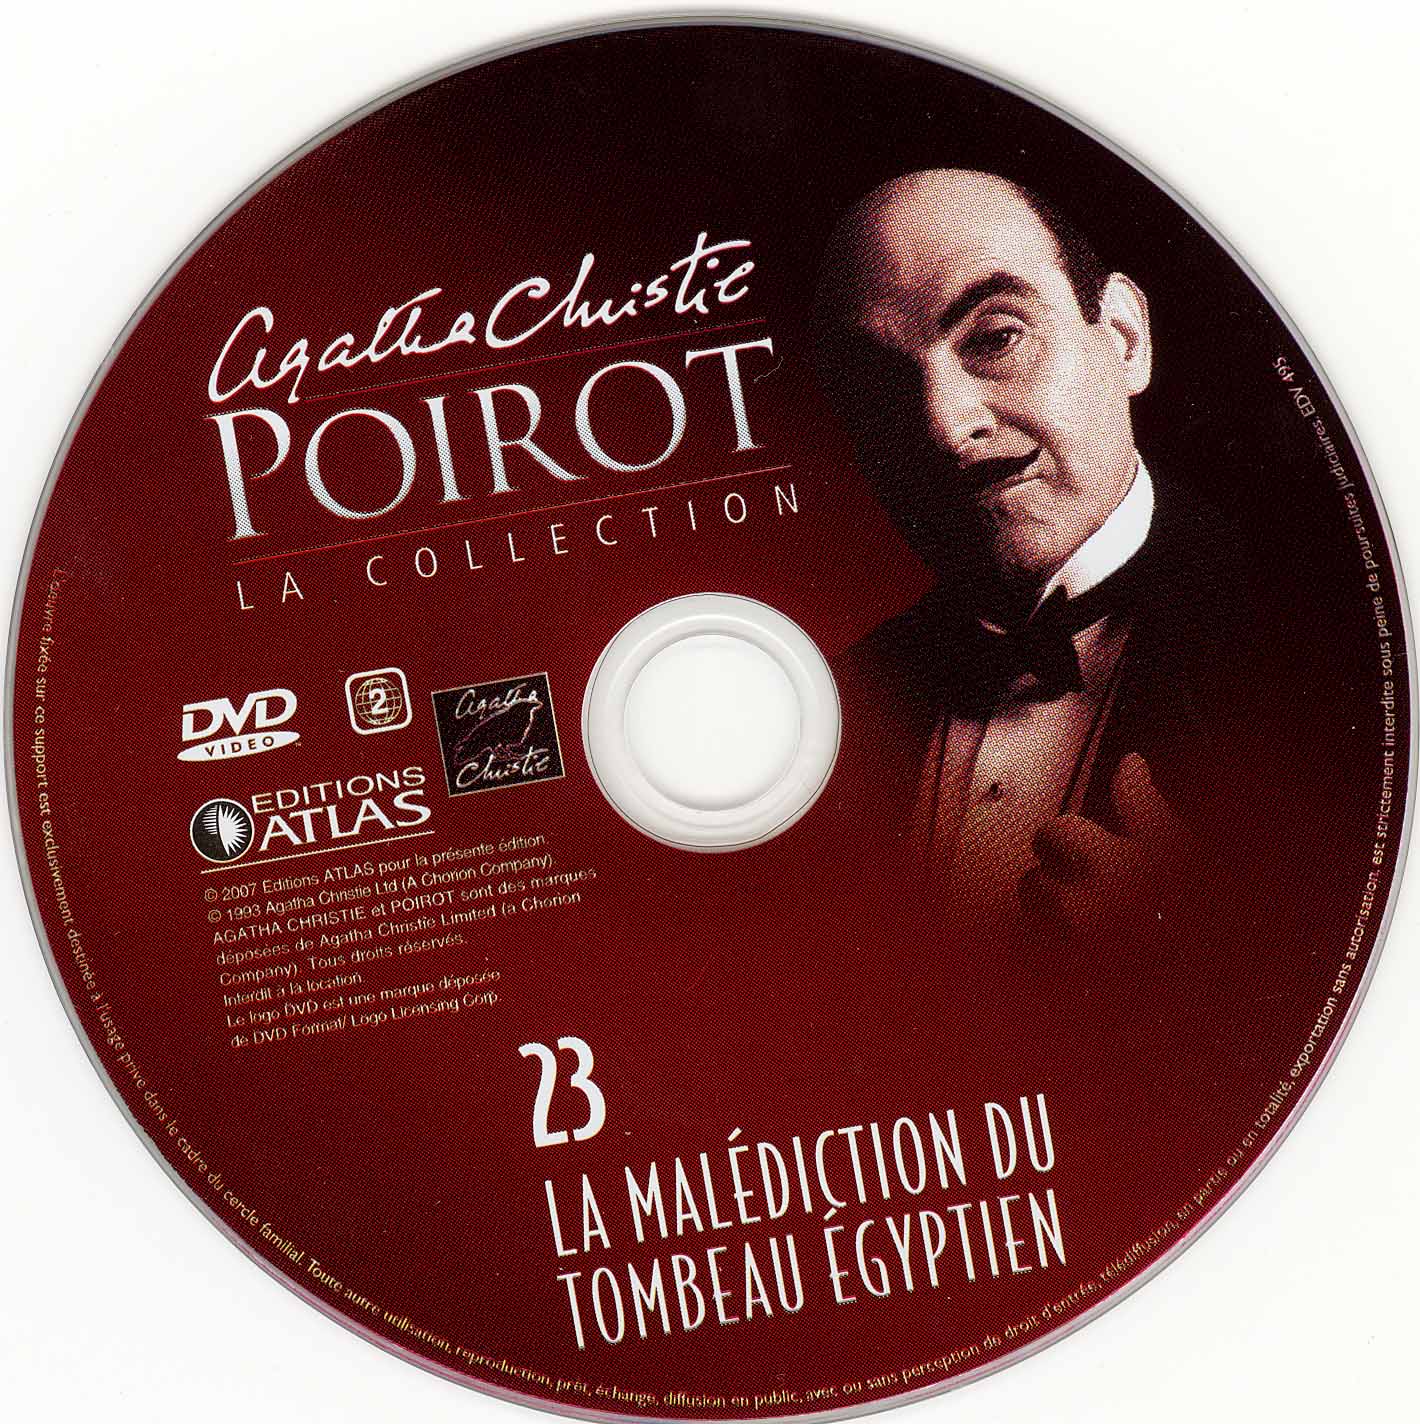 Hercule Poirot vol 23